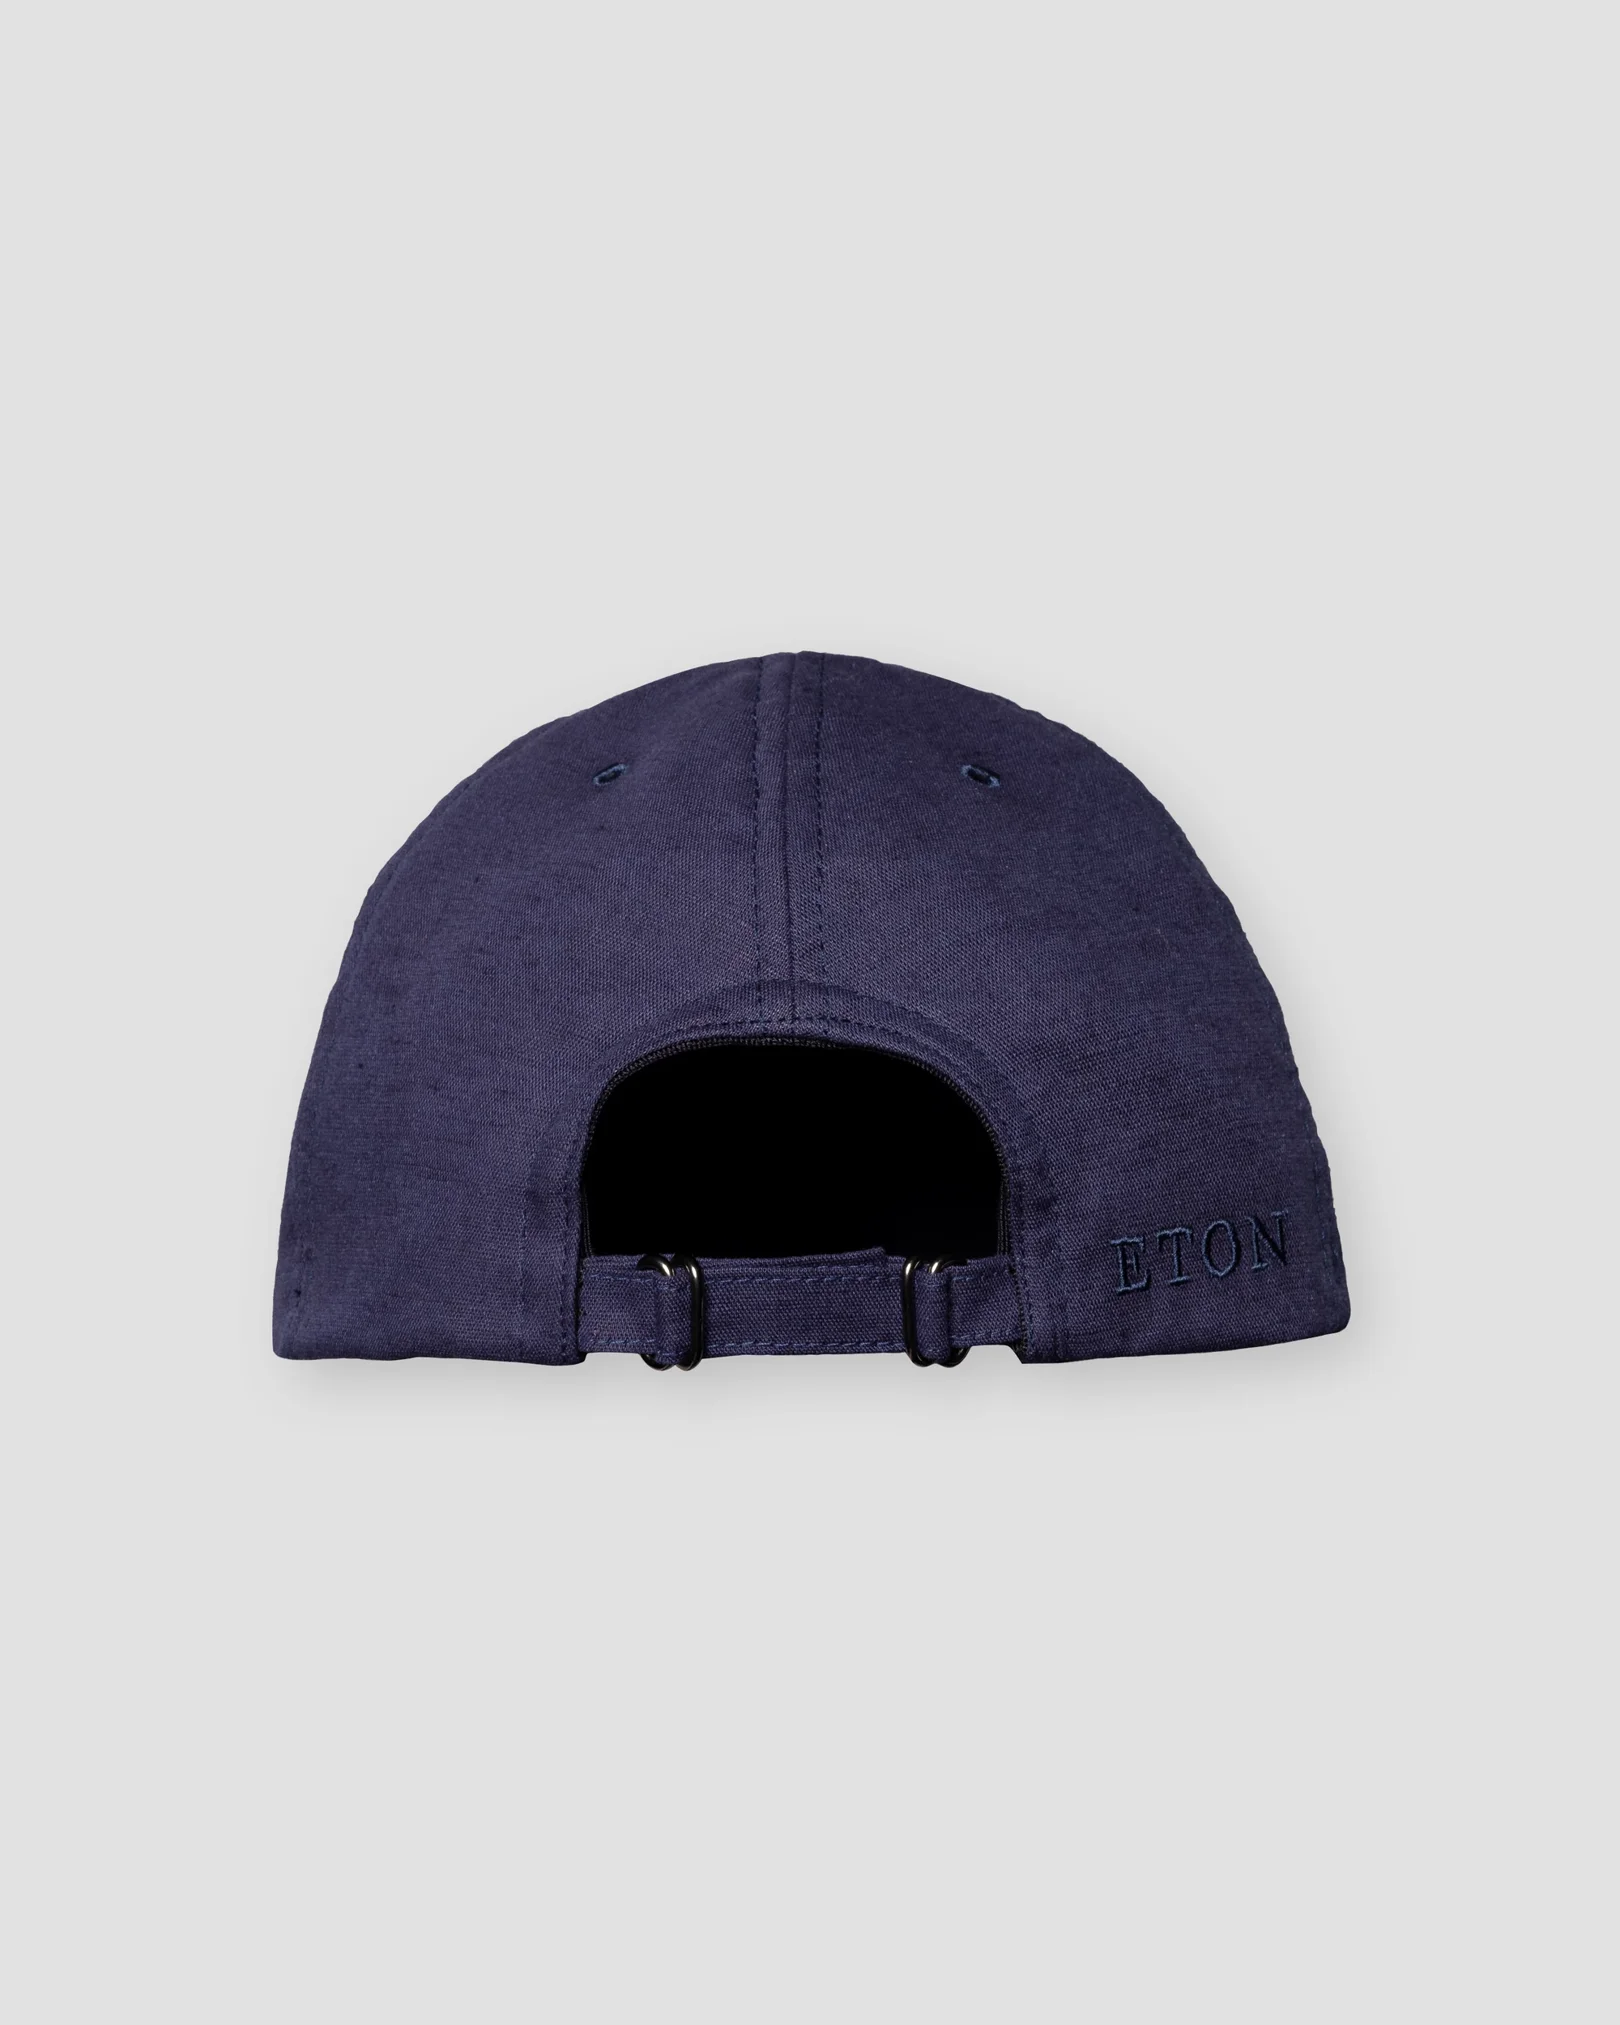 Eton - navy blue linen cotton baseball cap